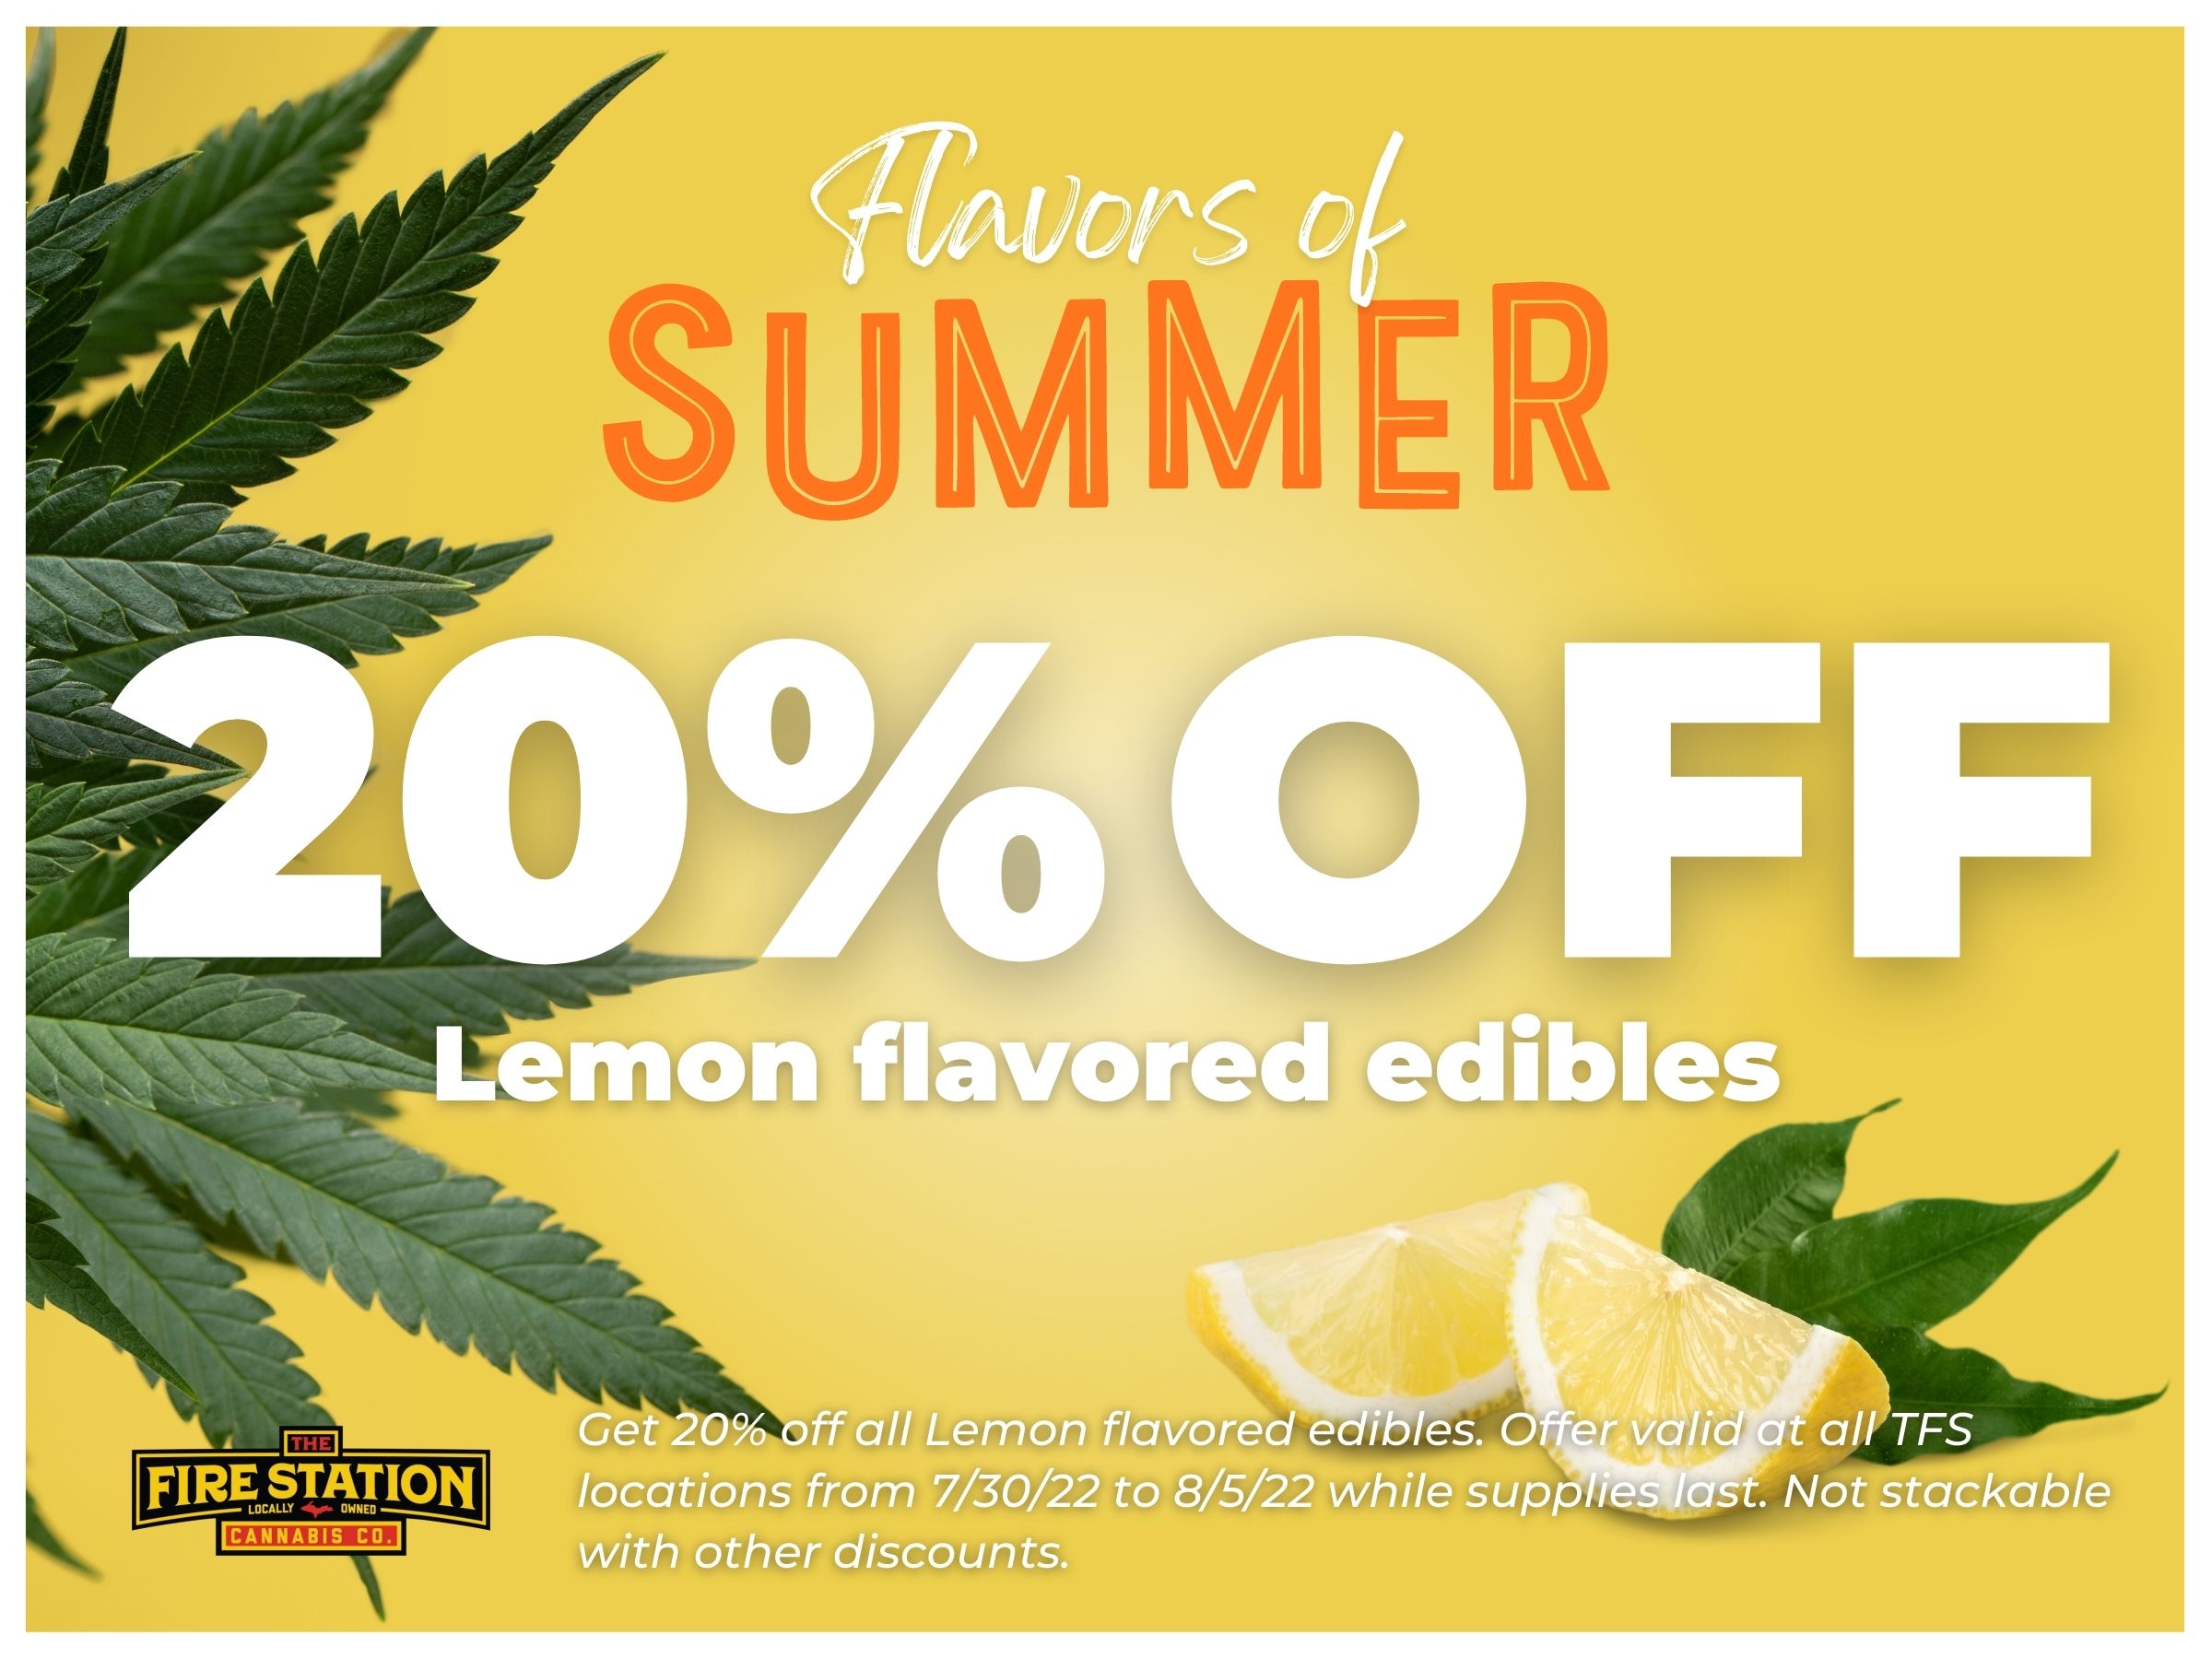 Flavors of Summer Sale - Lemon